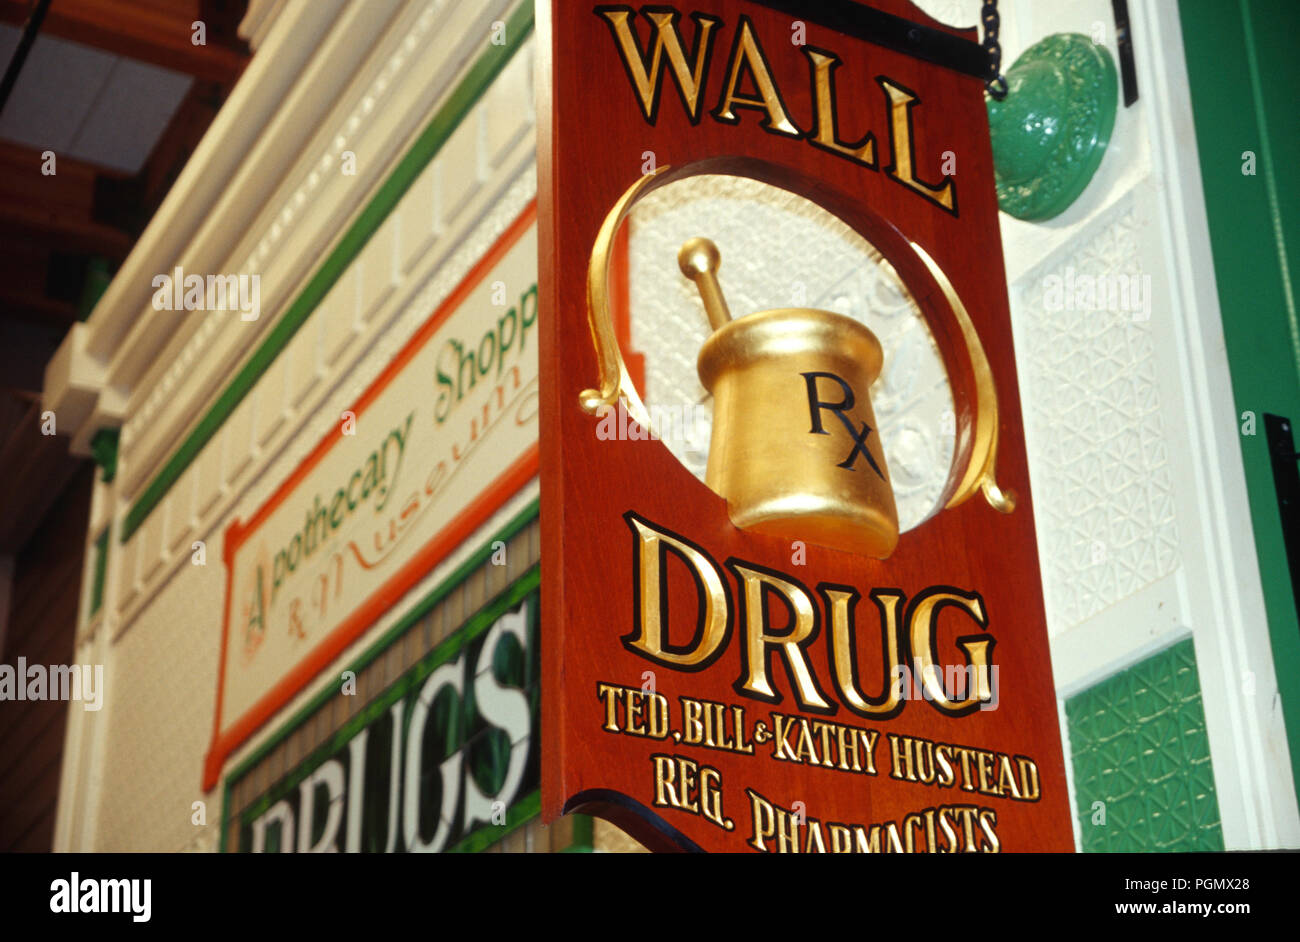 Wall Drug Store Apothecary Shoppe and Museum, Wall, South Dakota, USA Stock Photo